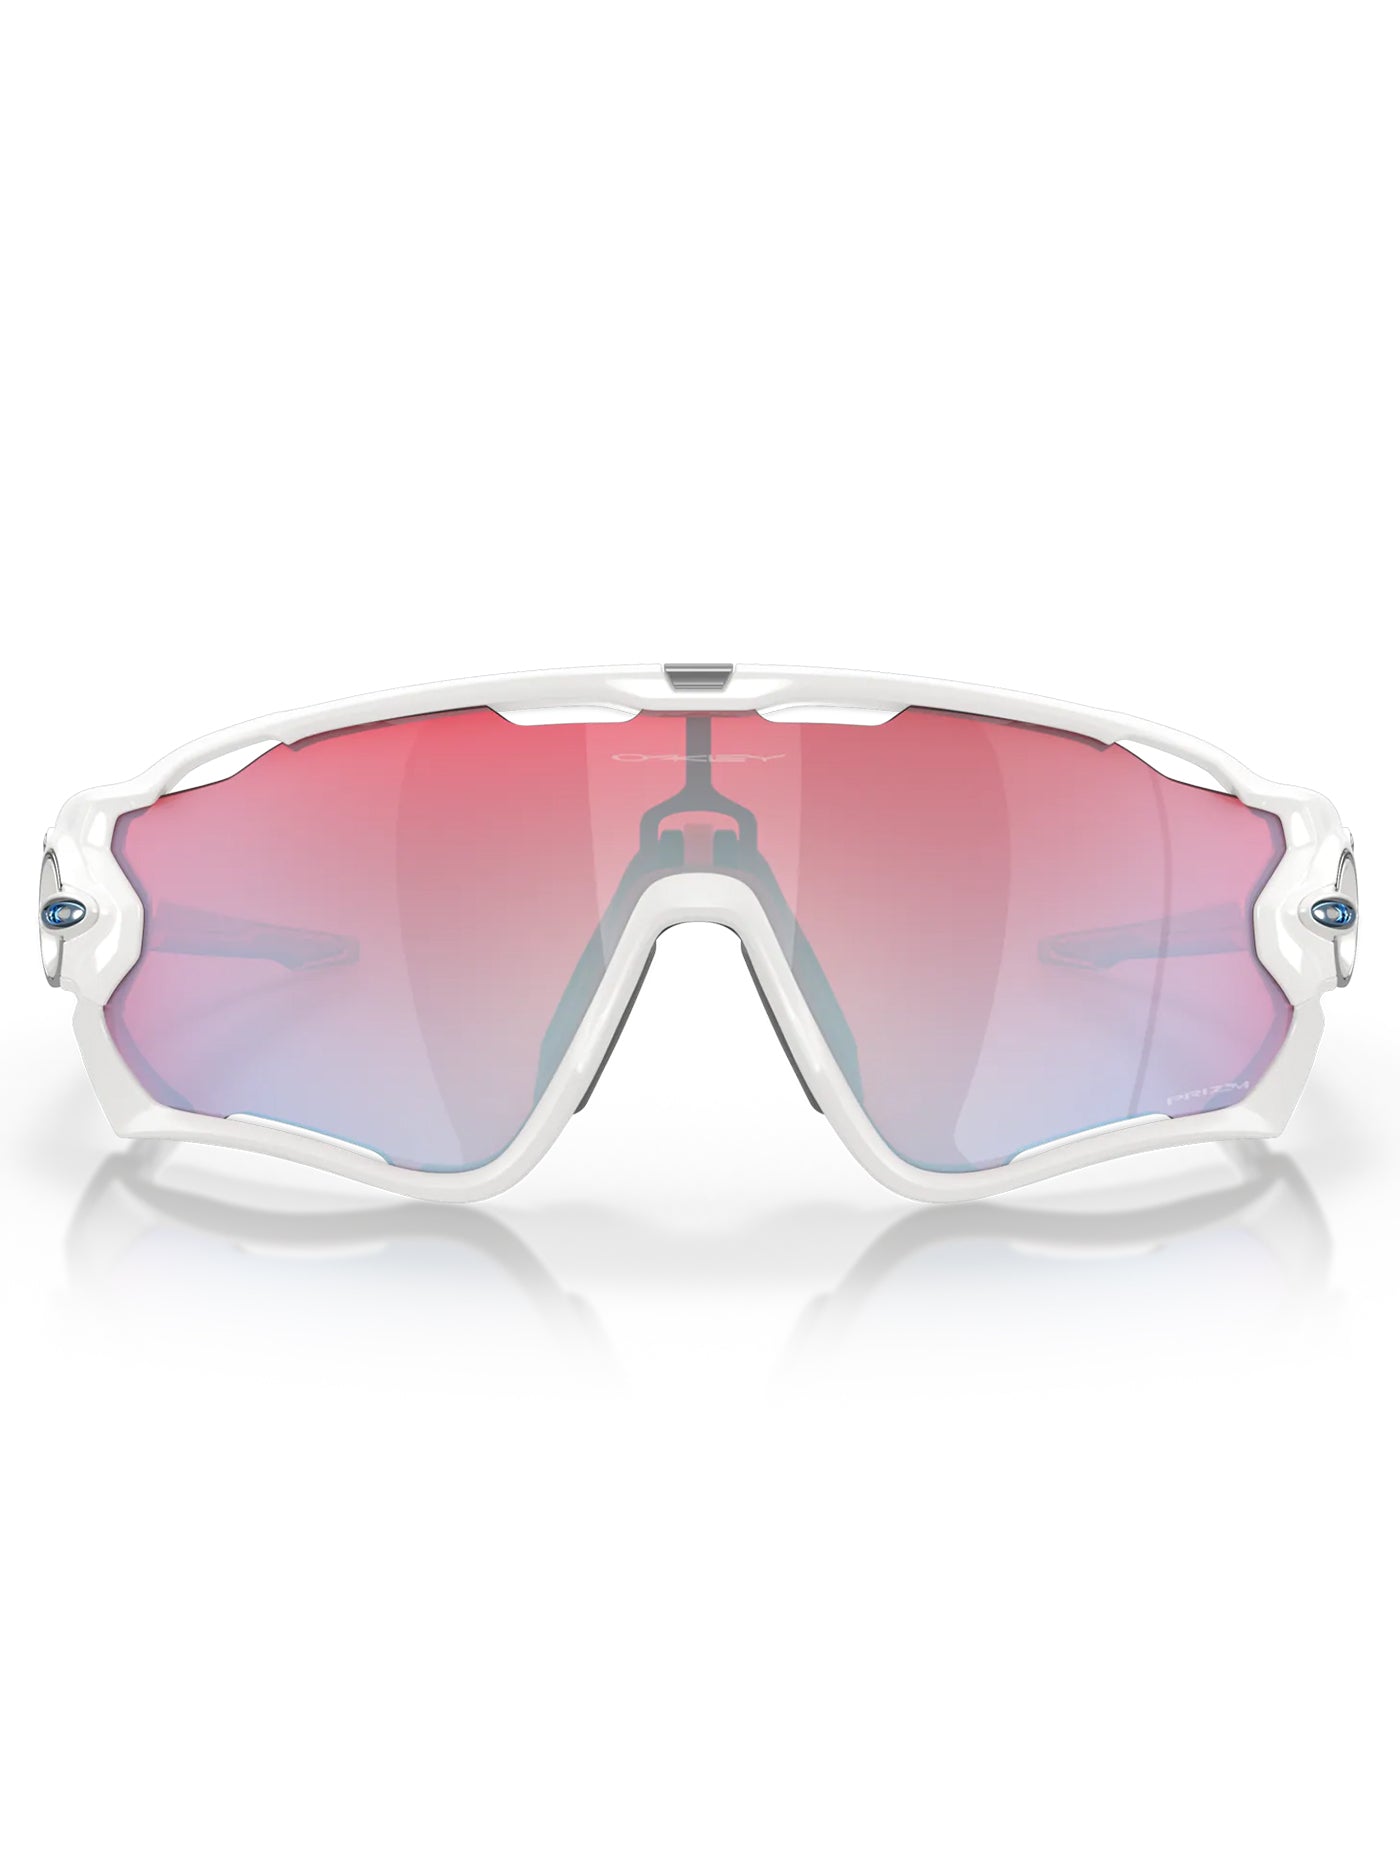 Oakley Jawbreaker White/Prizm Snow Sapphire Sunglasses